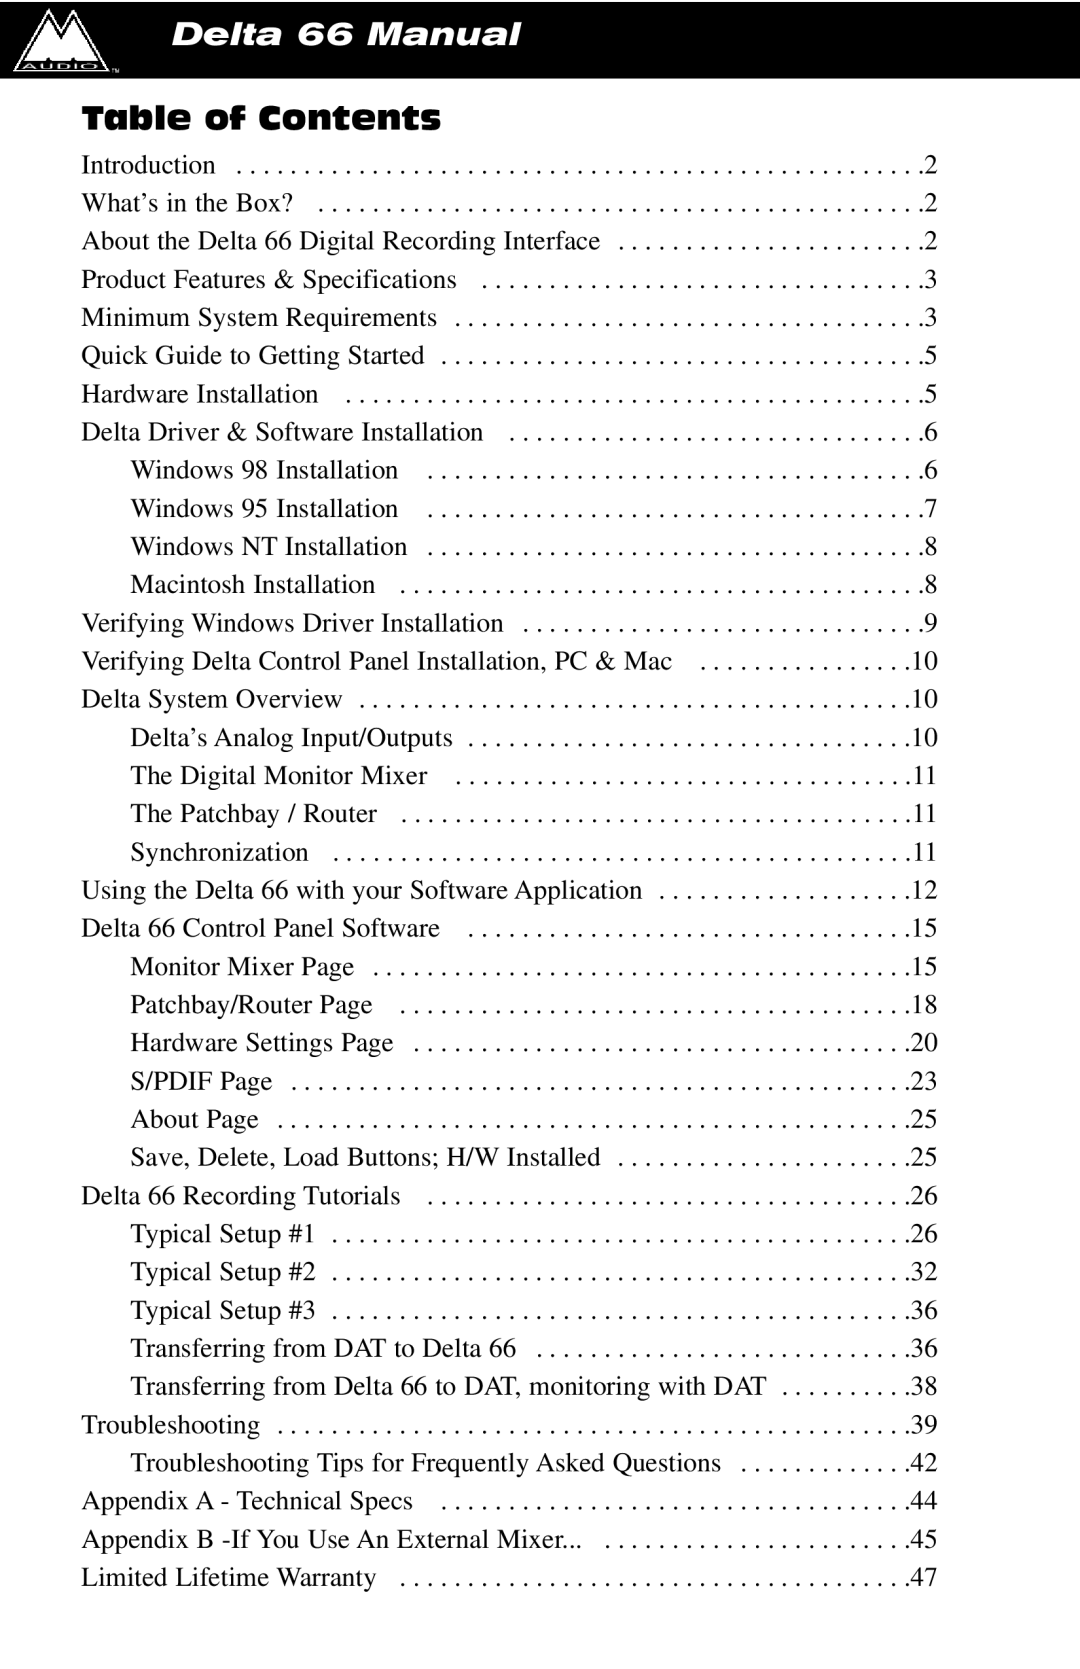 M-Audio manual Table of Contents, Delta 66 Manual 